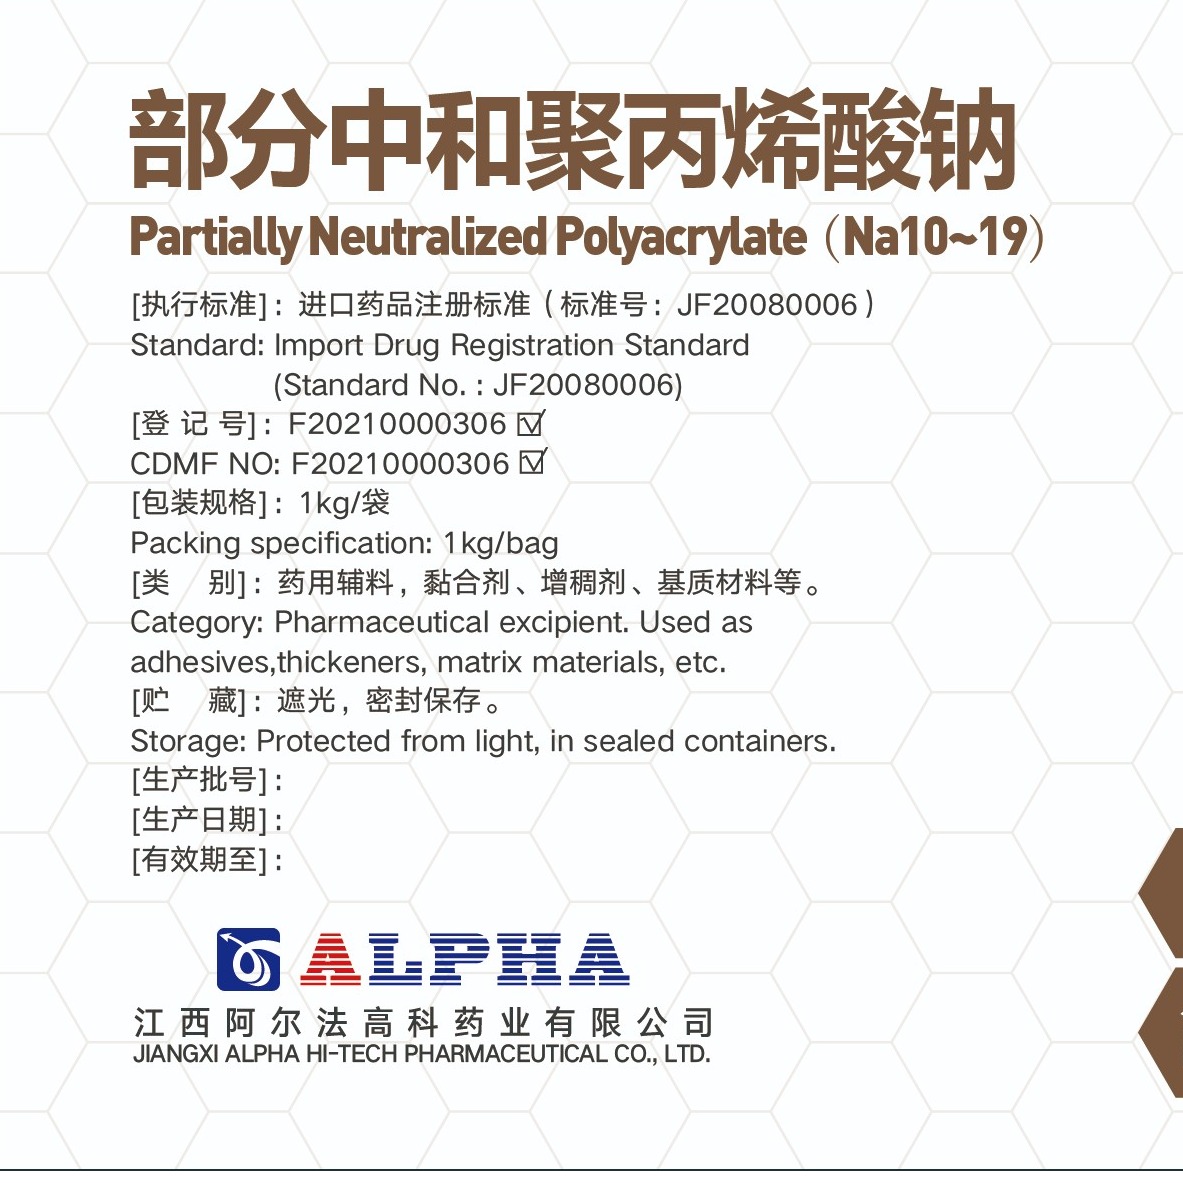 Partially Neutralized Polyacrylate